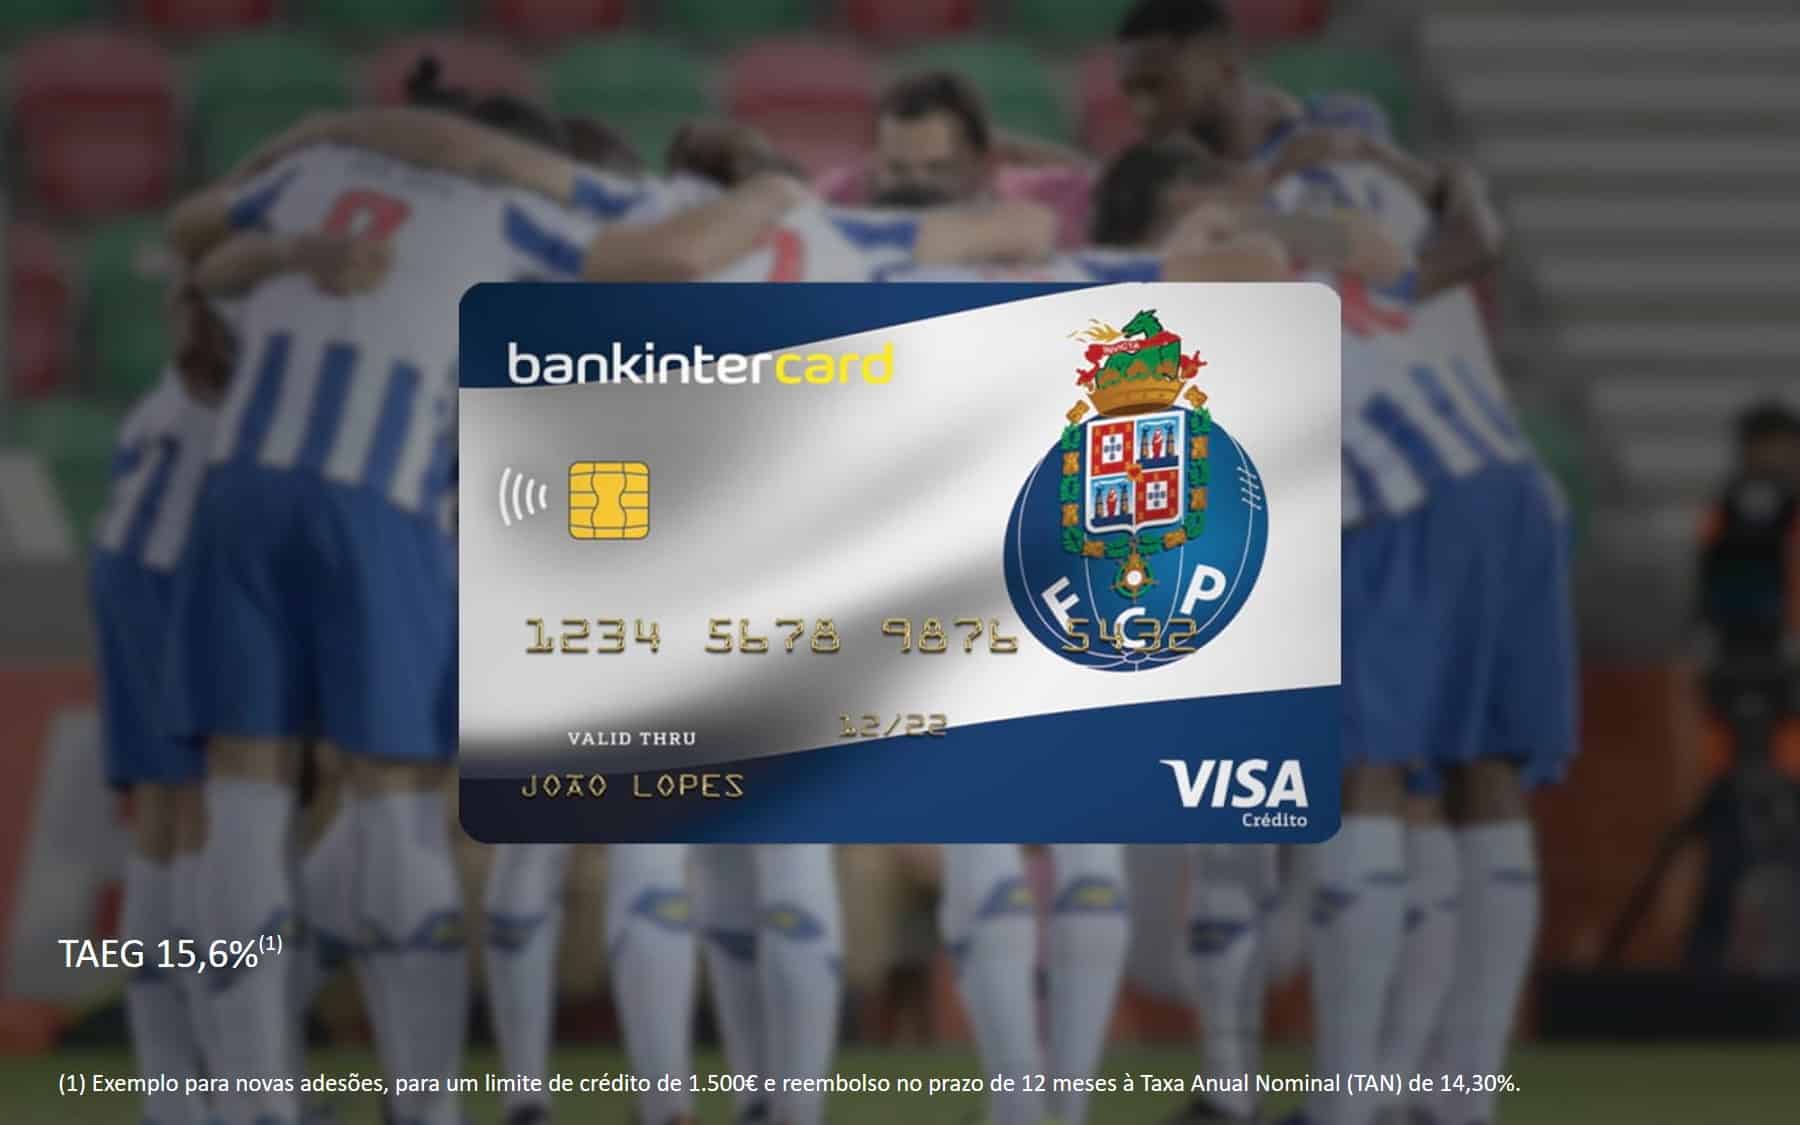 Oportunidade: bankintercard oferece vantagens exclusivas a adeptos do FC Porto